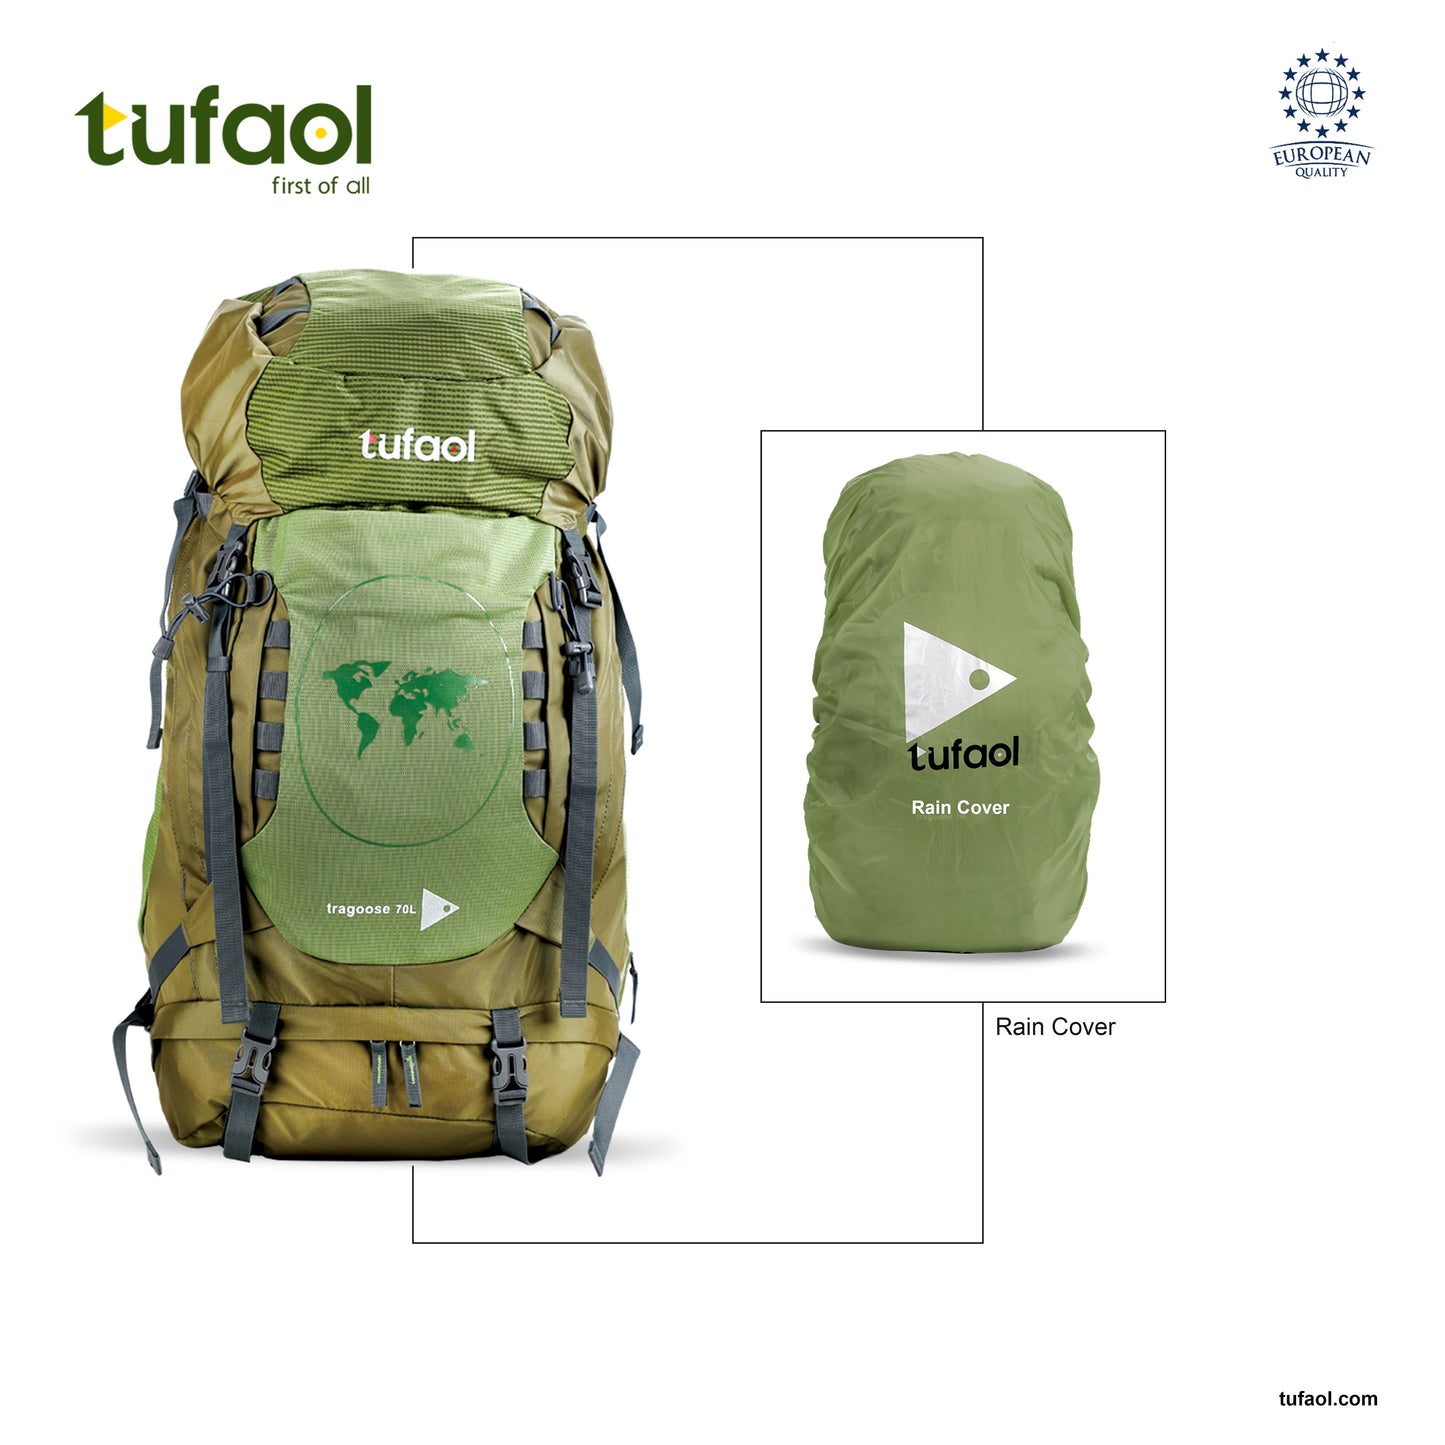 Tragoose 70 L Trekking Rucksack Travel Bag Hiking Backpack Nylon Miltary Green